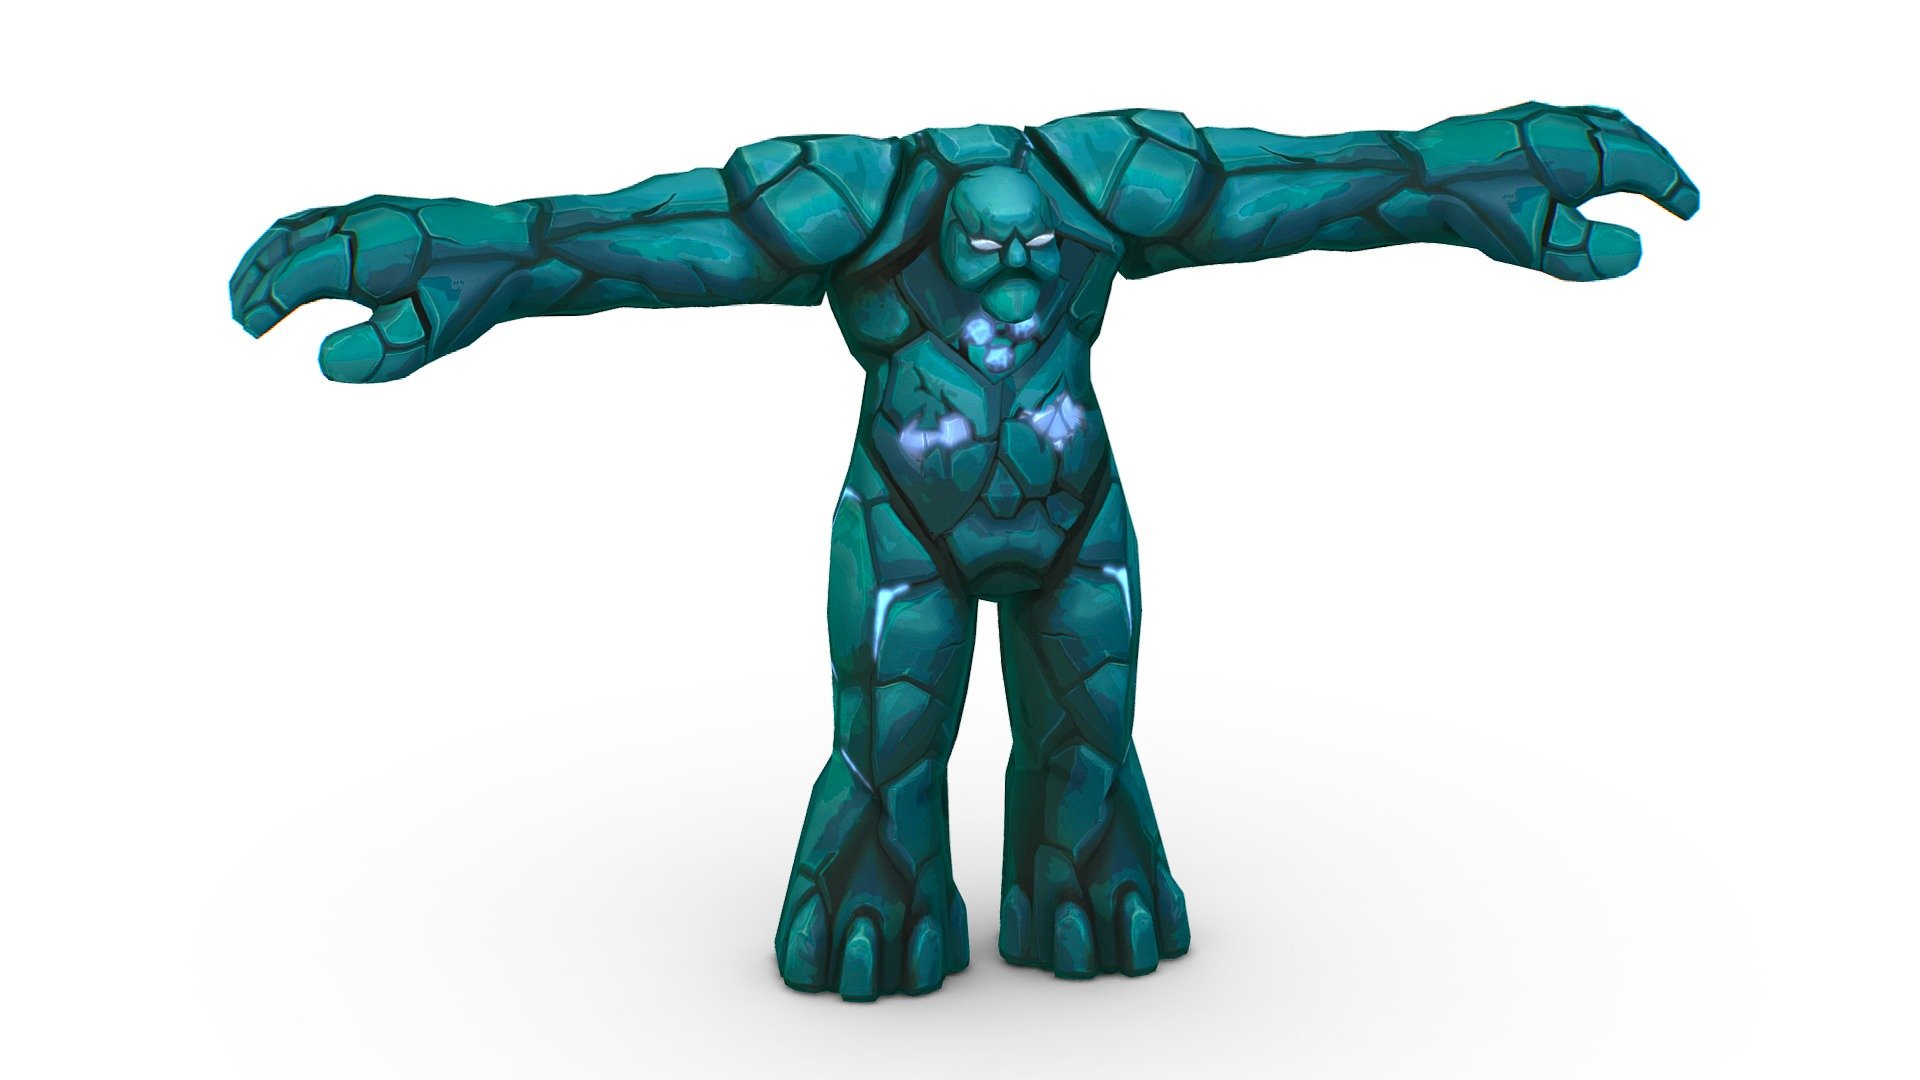 LowPoly 3d model - Cartoon Blue Ice Golem Monster Giant - 3dsMax and Maya file included - Texture size 2048 color map - Cartoon Blue Ice Golem Monster Giant - Buy Royalty Free 3D model by Oleg Shuldiakov (@olegshuldiakov) 3d model